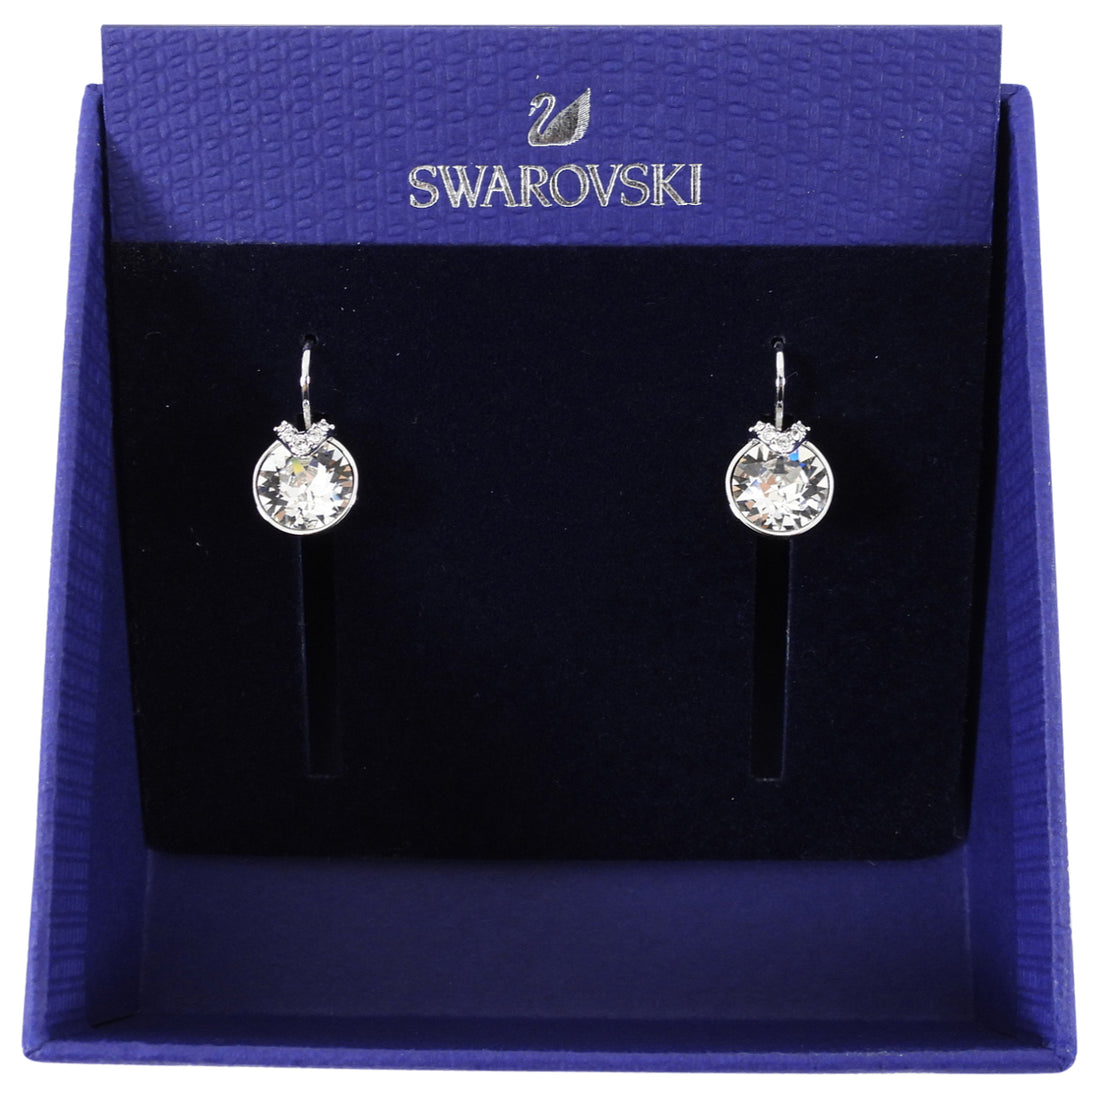 Swarovski Clear Round Crystal Earrings